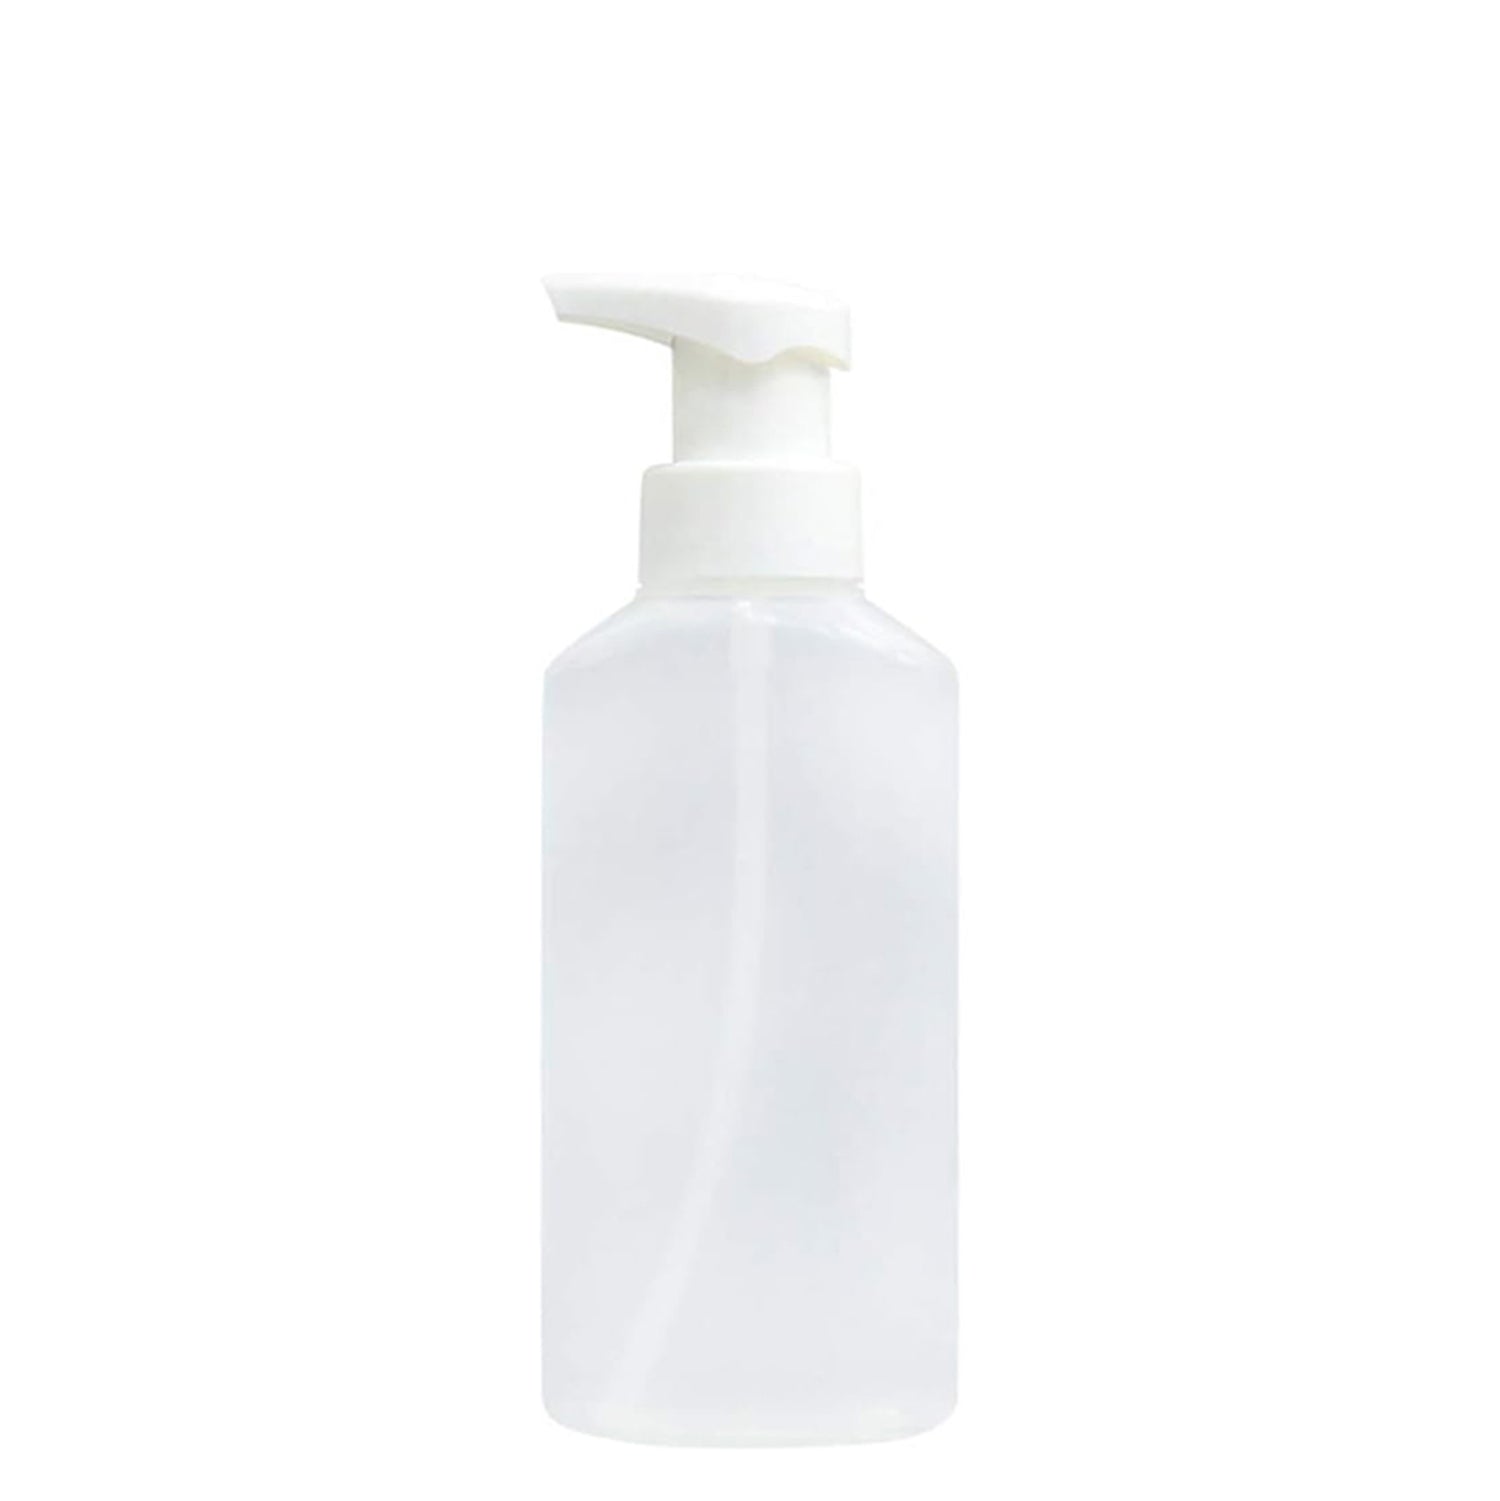 Bonplex hair salon foaming bottle for perm shampoo treatment